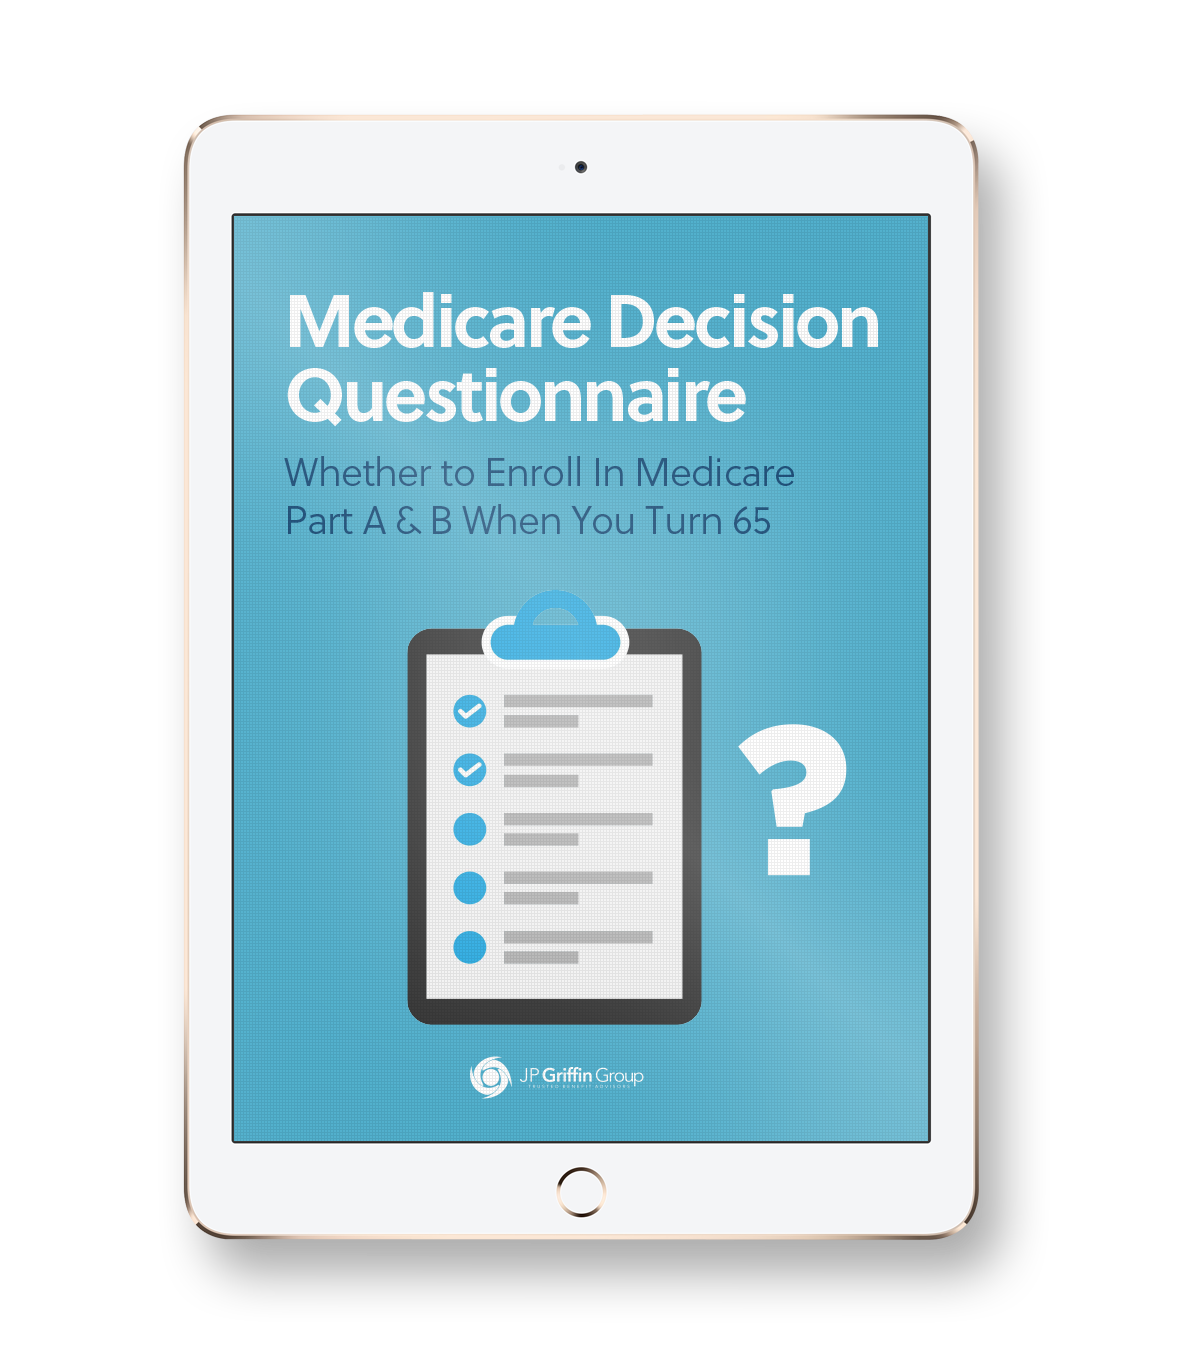 Medicare_Decision_Questionnaire_iPad_Image-1